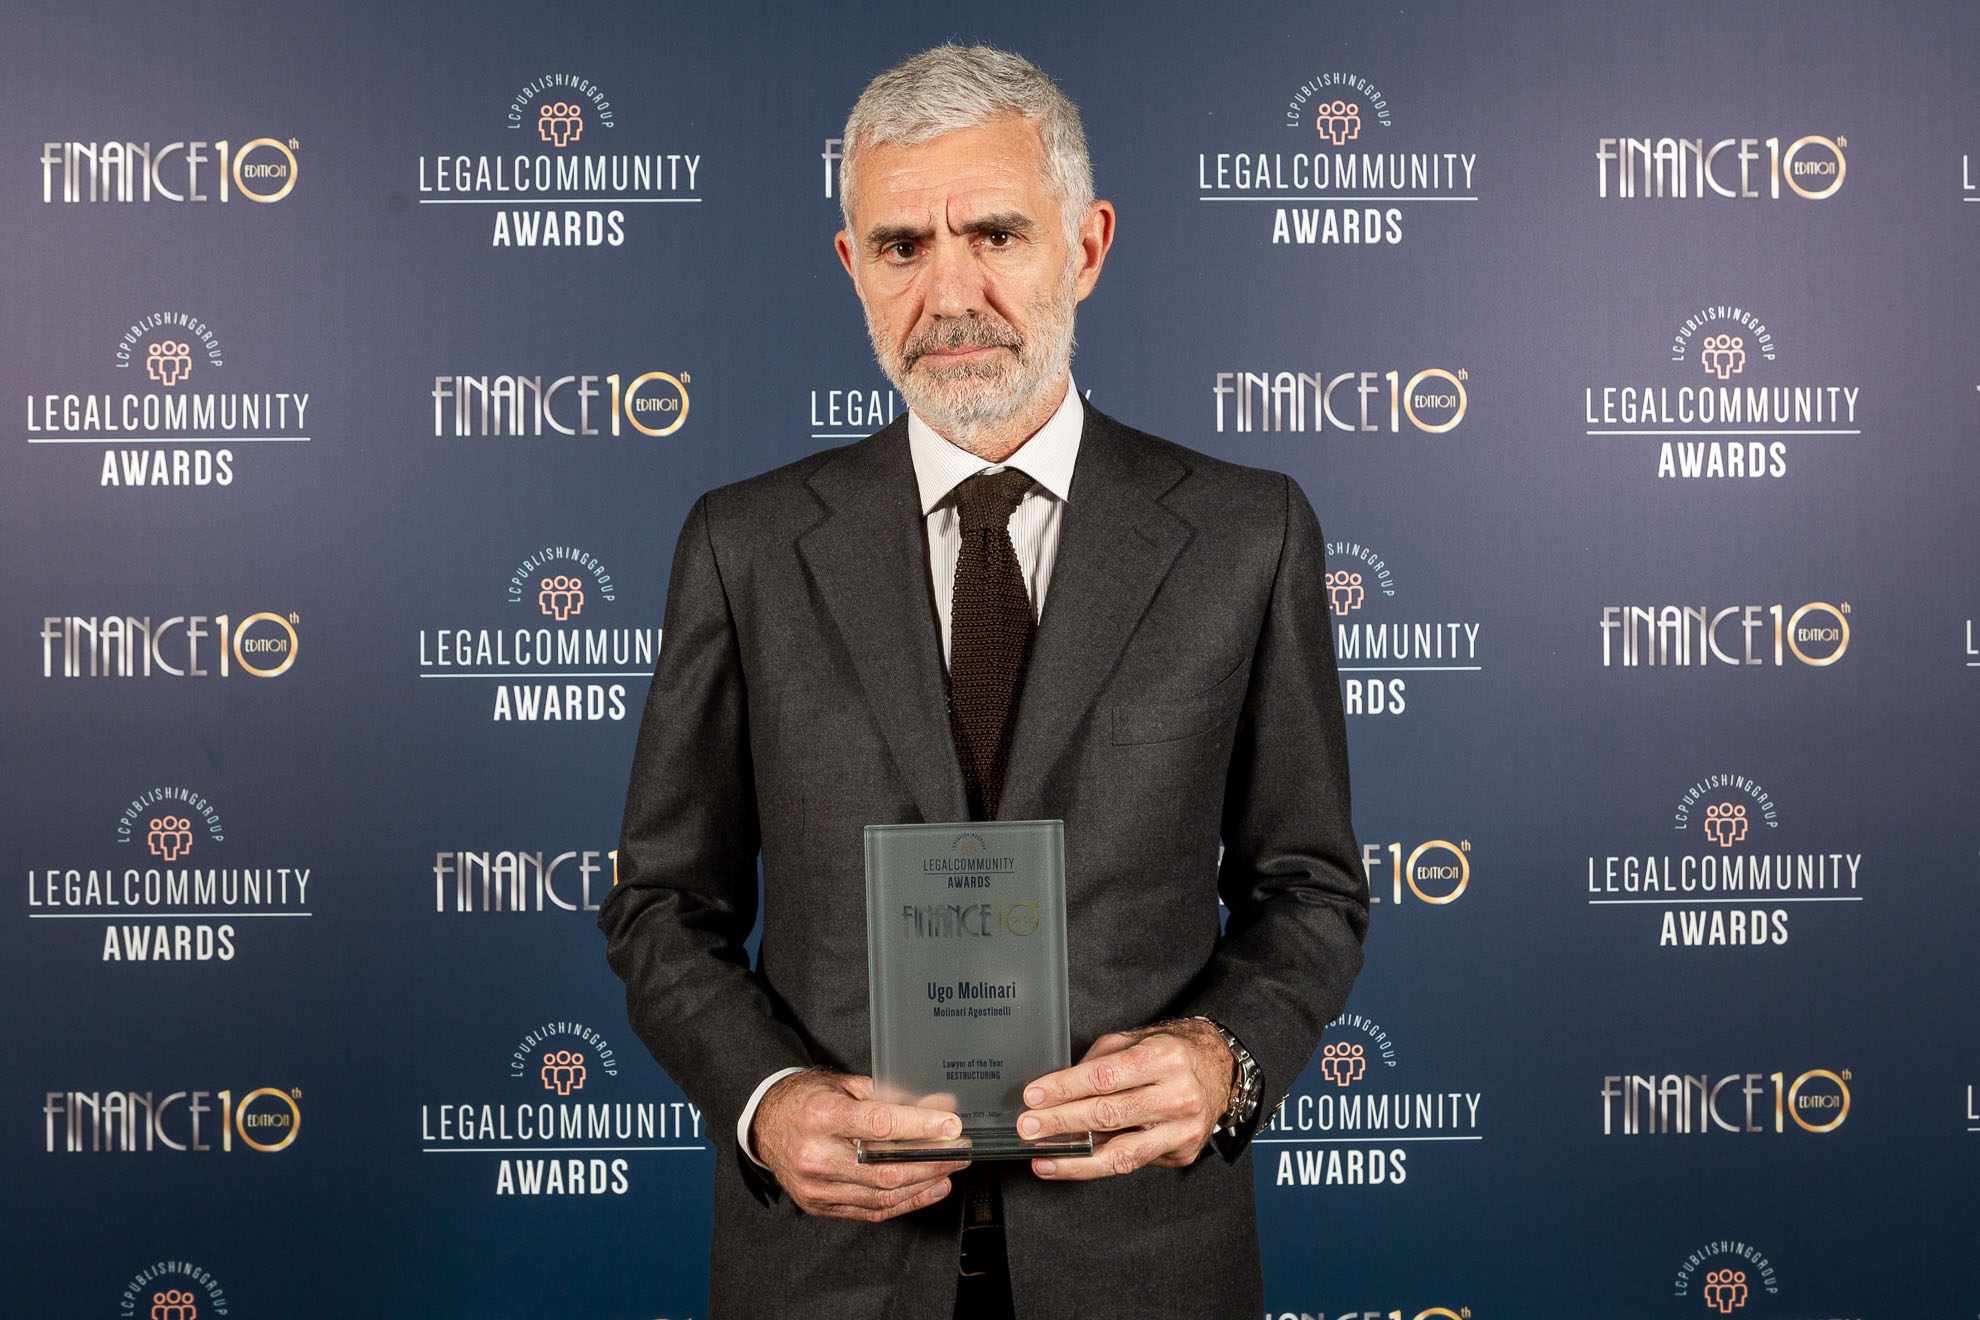 Ugo Molinari named Restructuring Lawyer of the Year at Legalcommunity Finance Awards